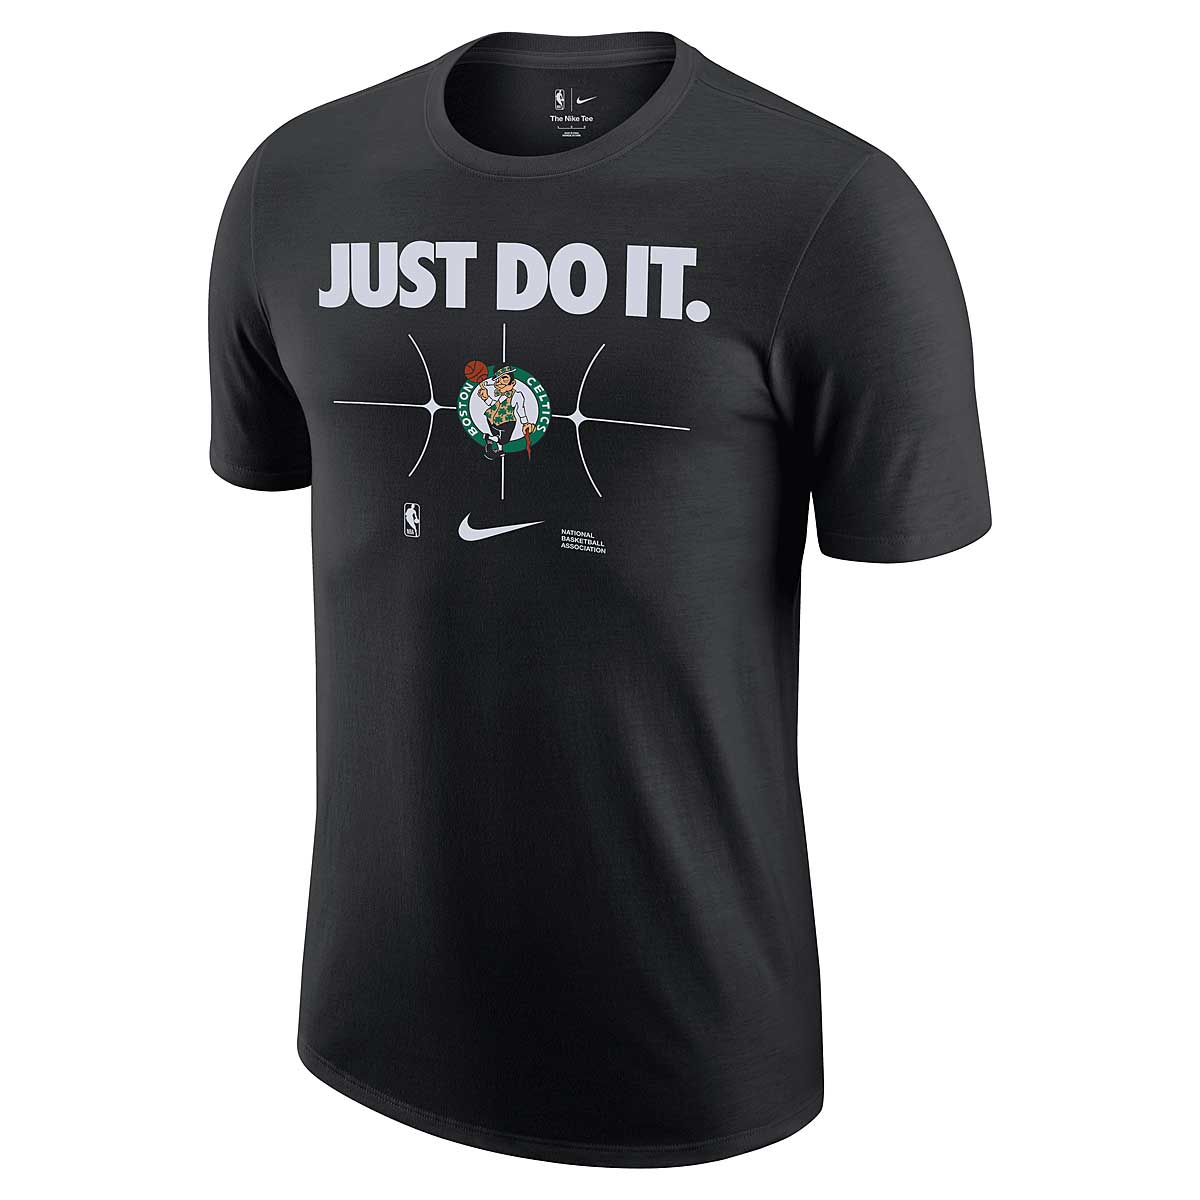 Nike NBA Boston Celtics Essential Just Do It T-shirt, Black 2XL